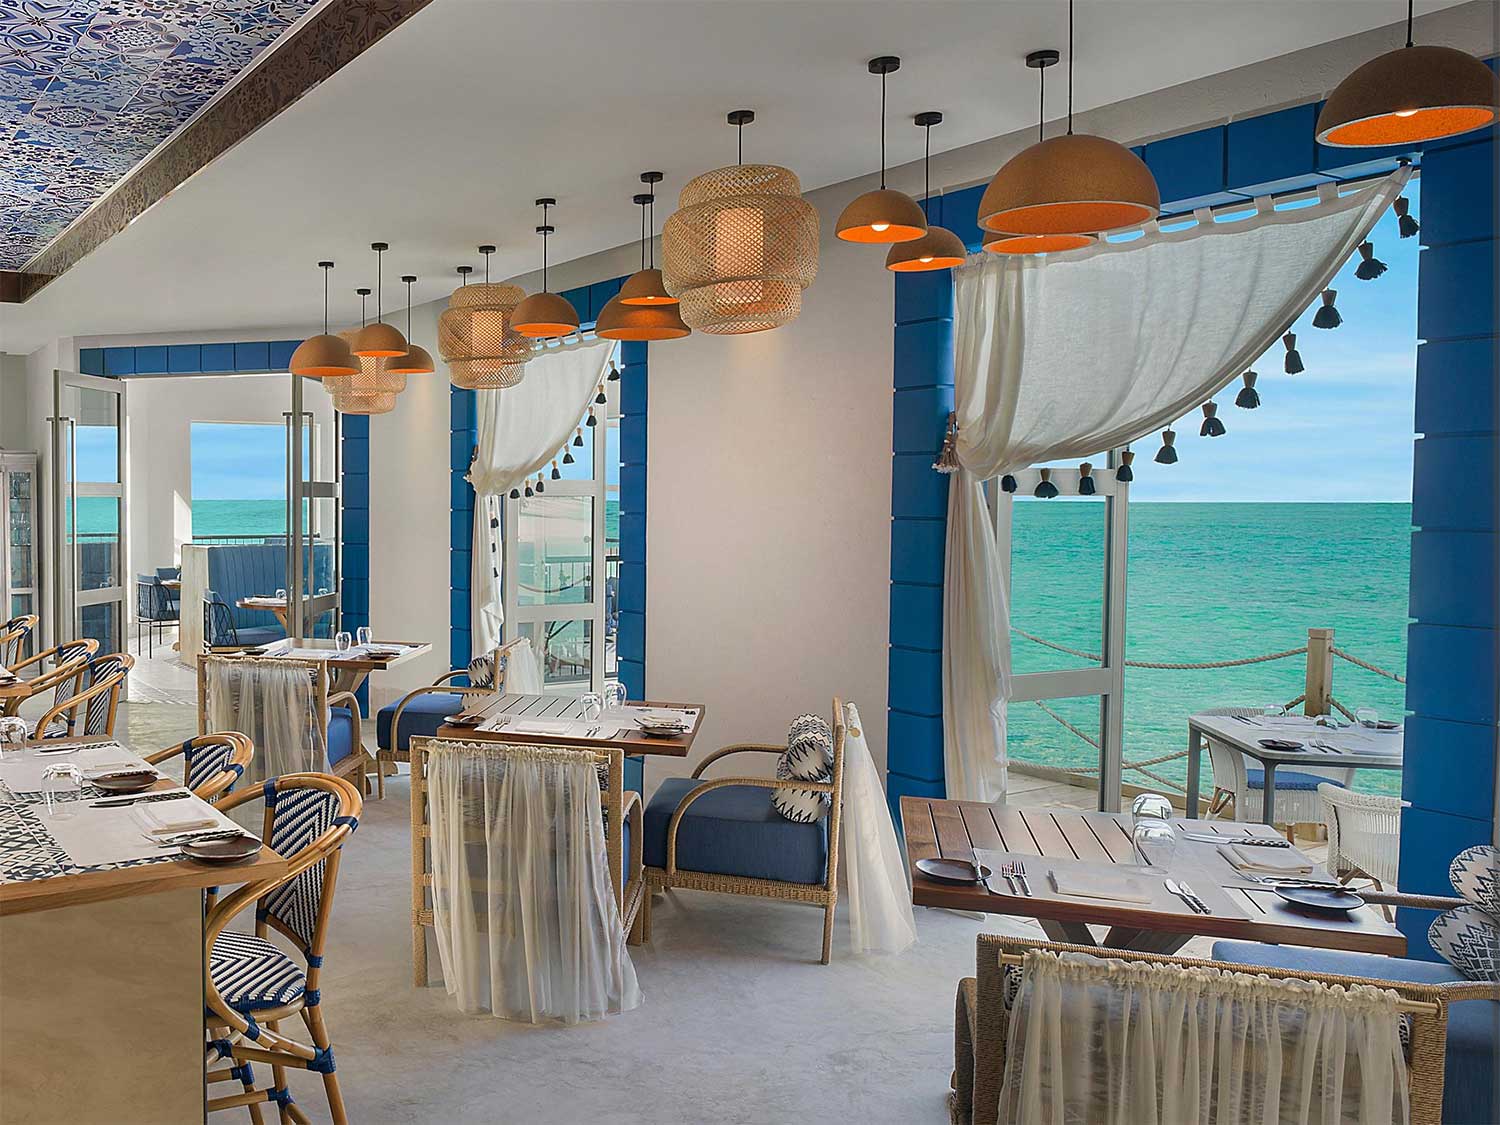 A dining interior of an island beach resort.